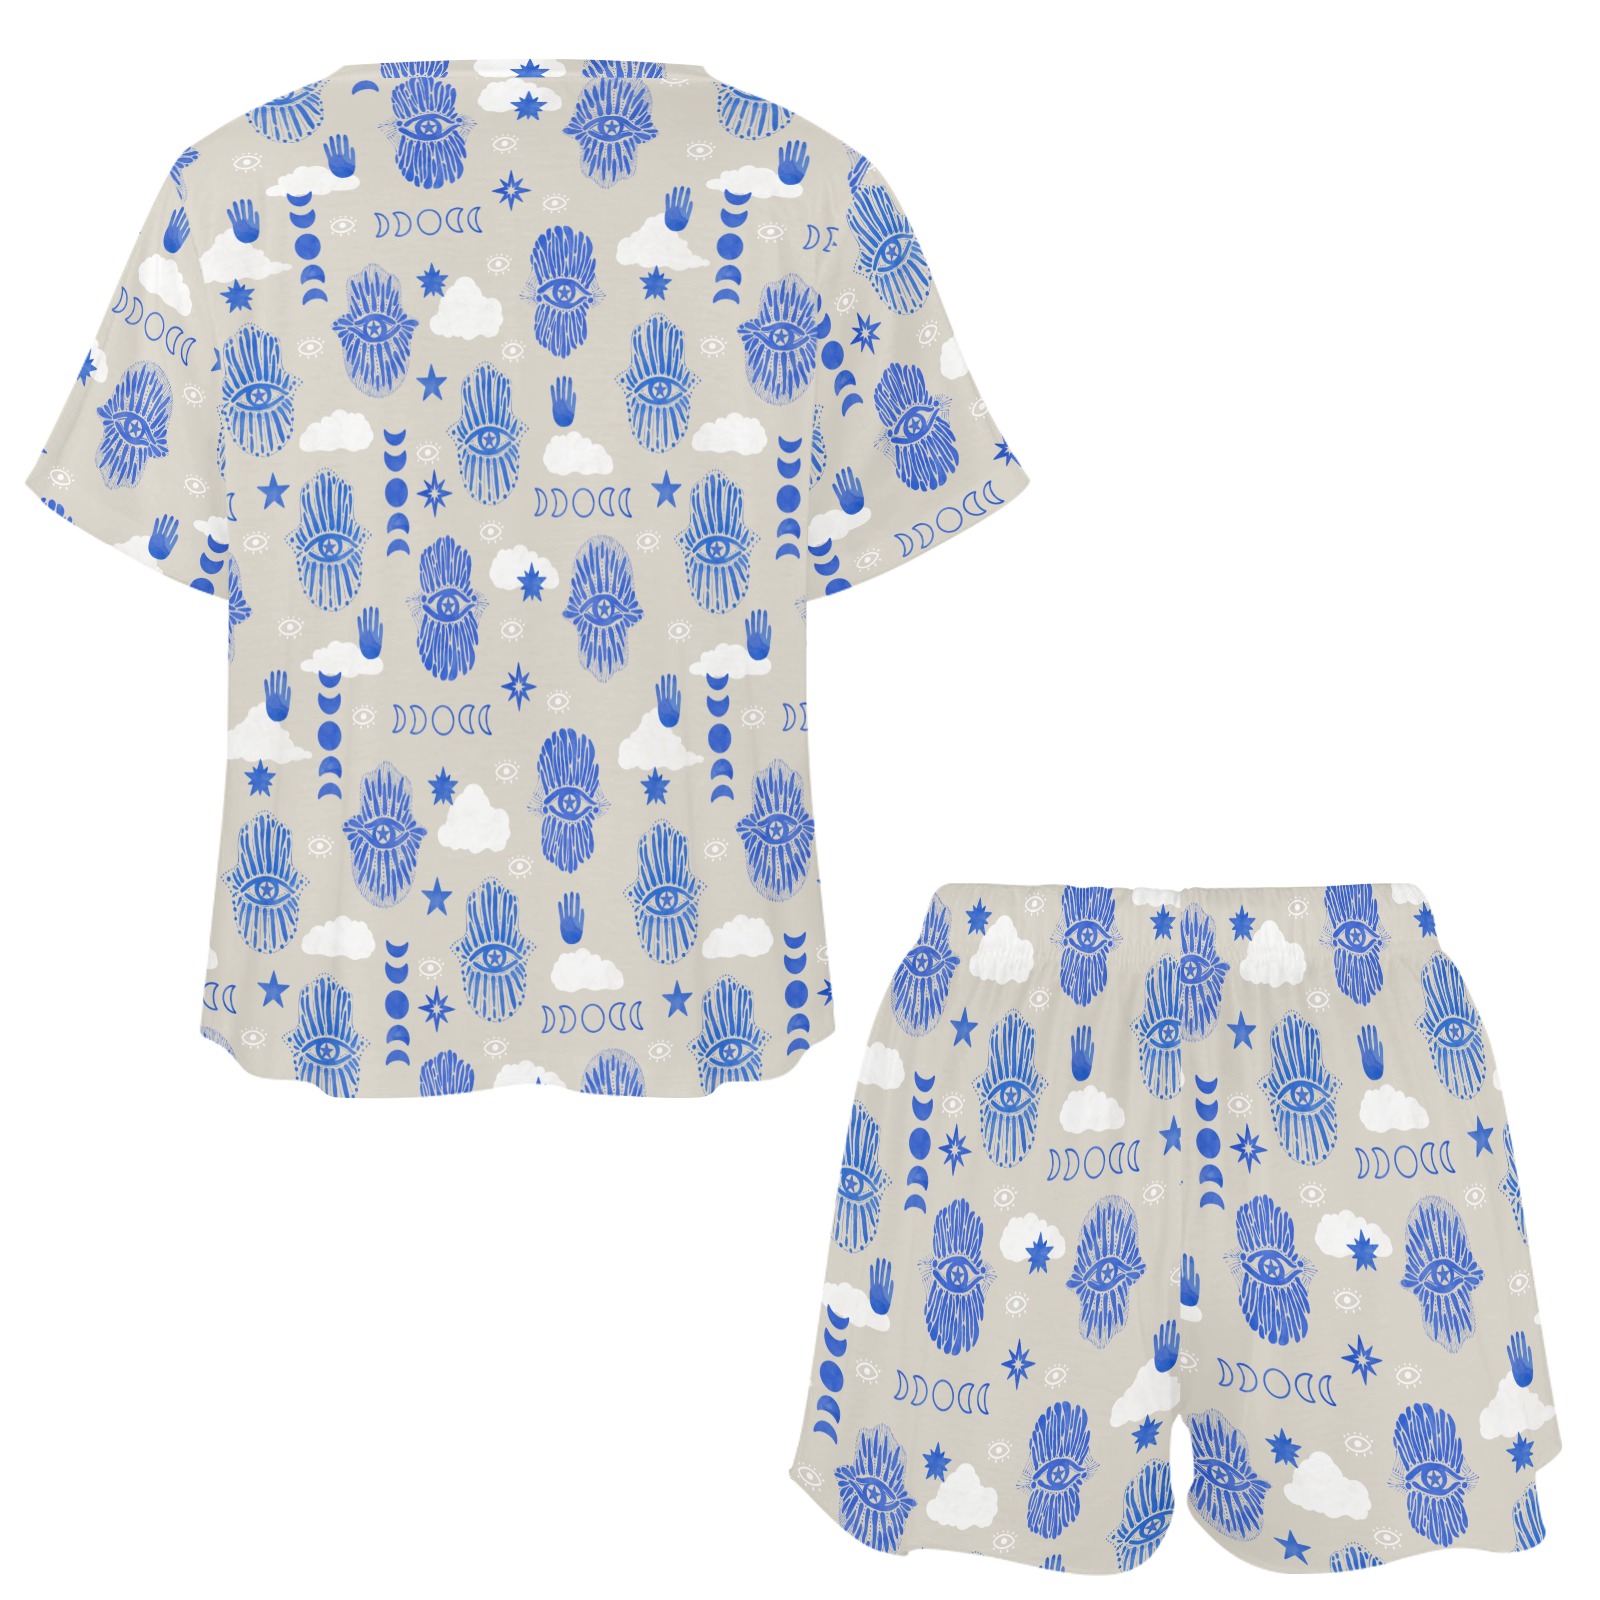 Jamsa and moon sky B Women's Mid-Length Shorts Pajama Set